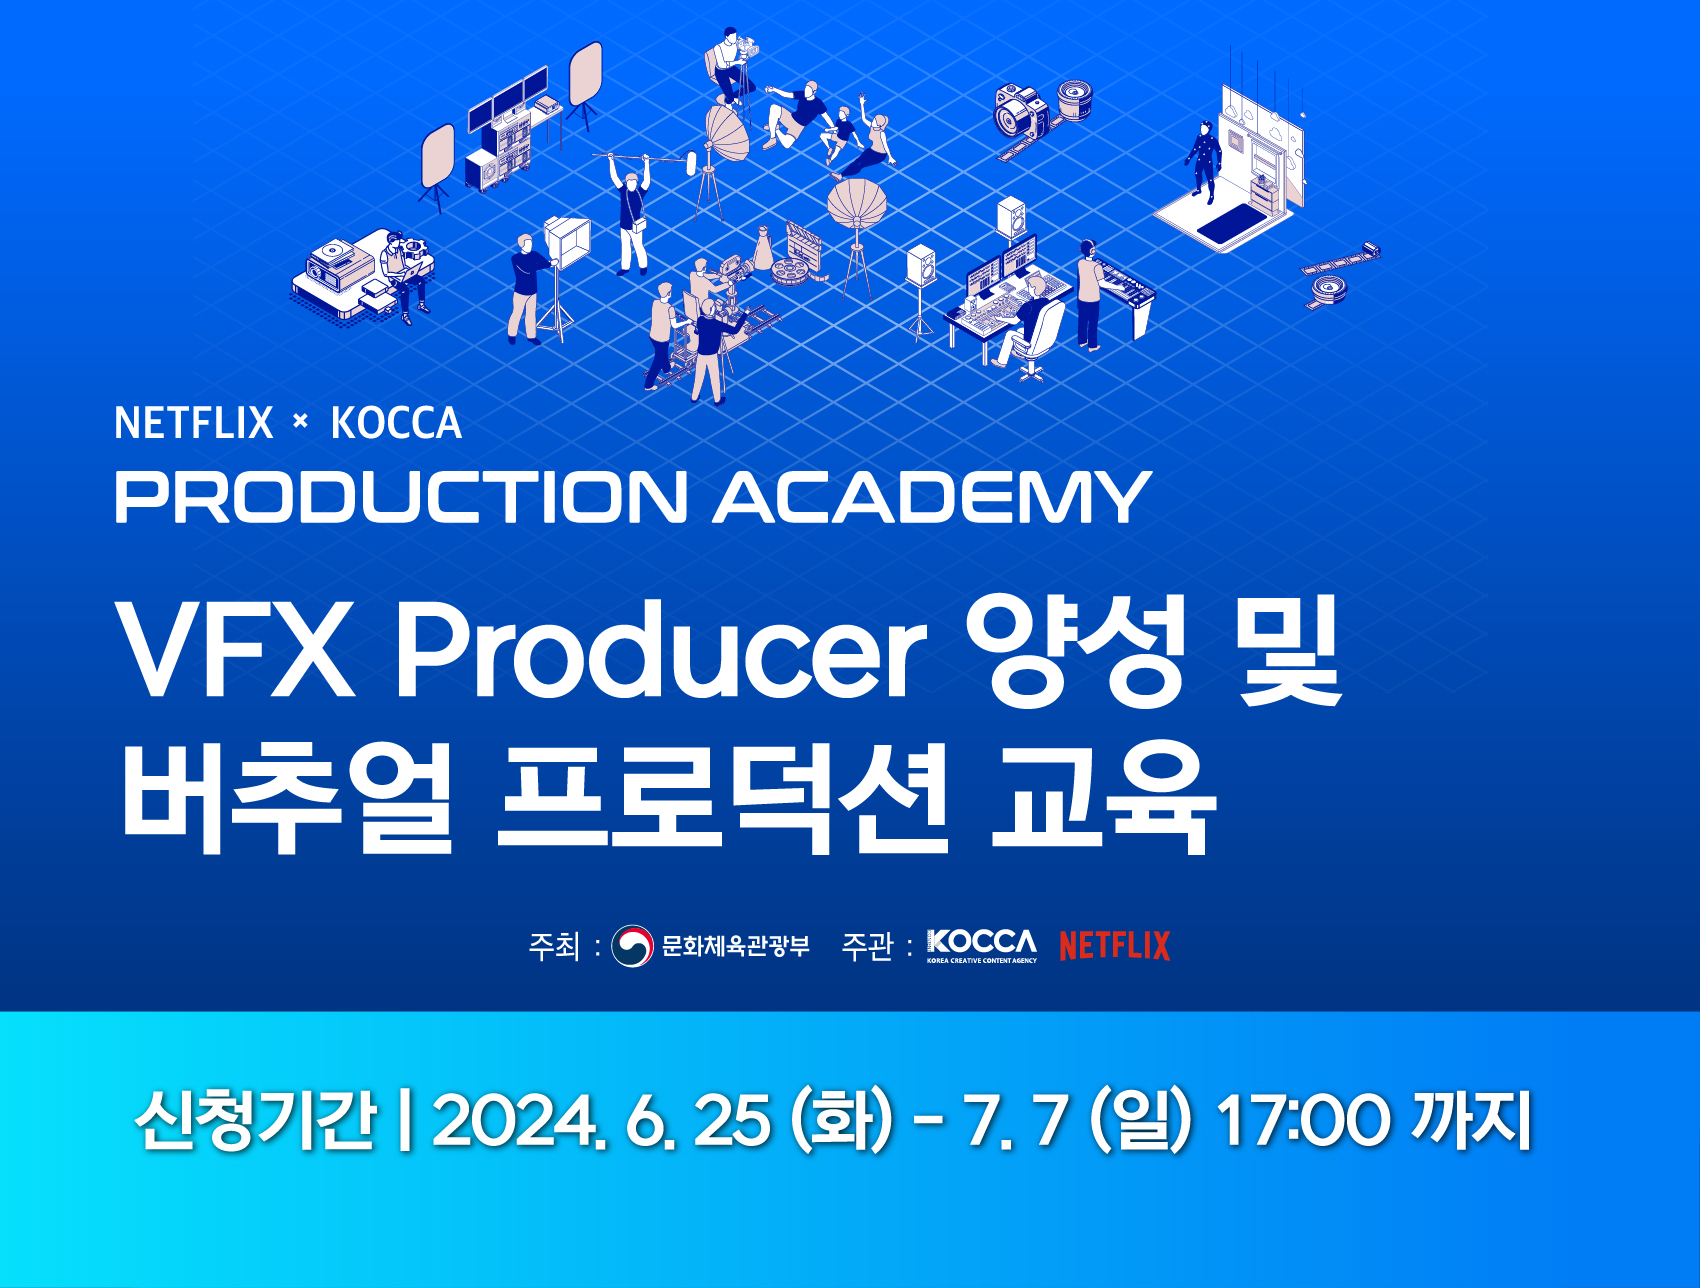 NETFLIX x KOCCA PRODUCTION ACADEMY VFX 프로듀서 양성 및 버추얼 프로덕션 교육생 모집				